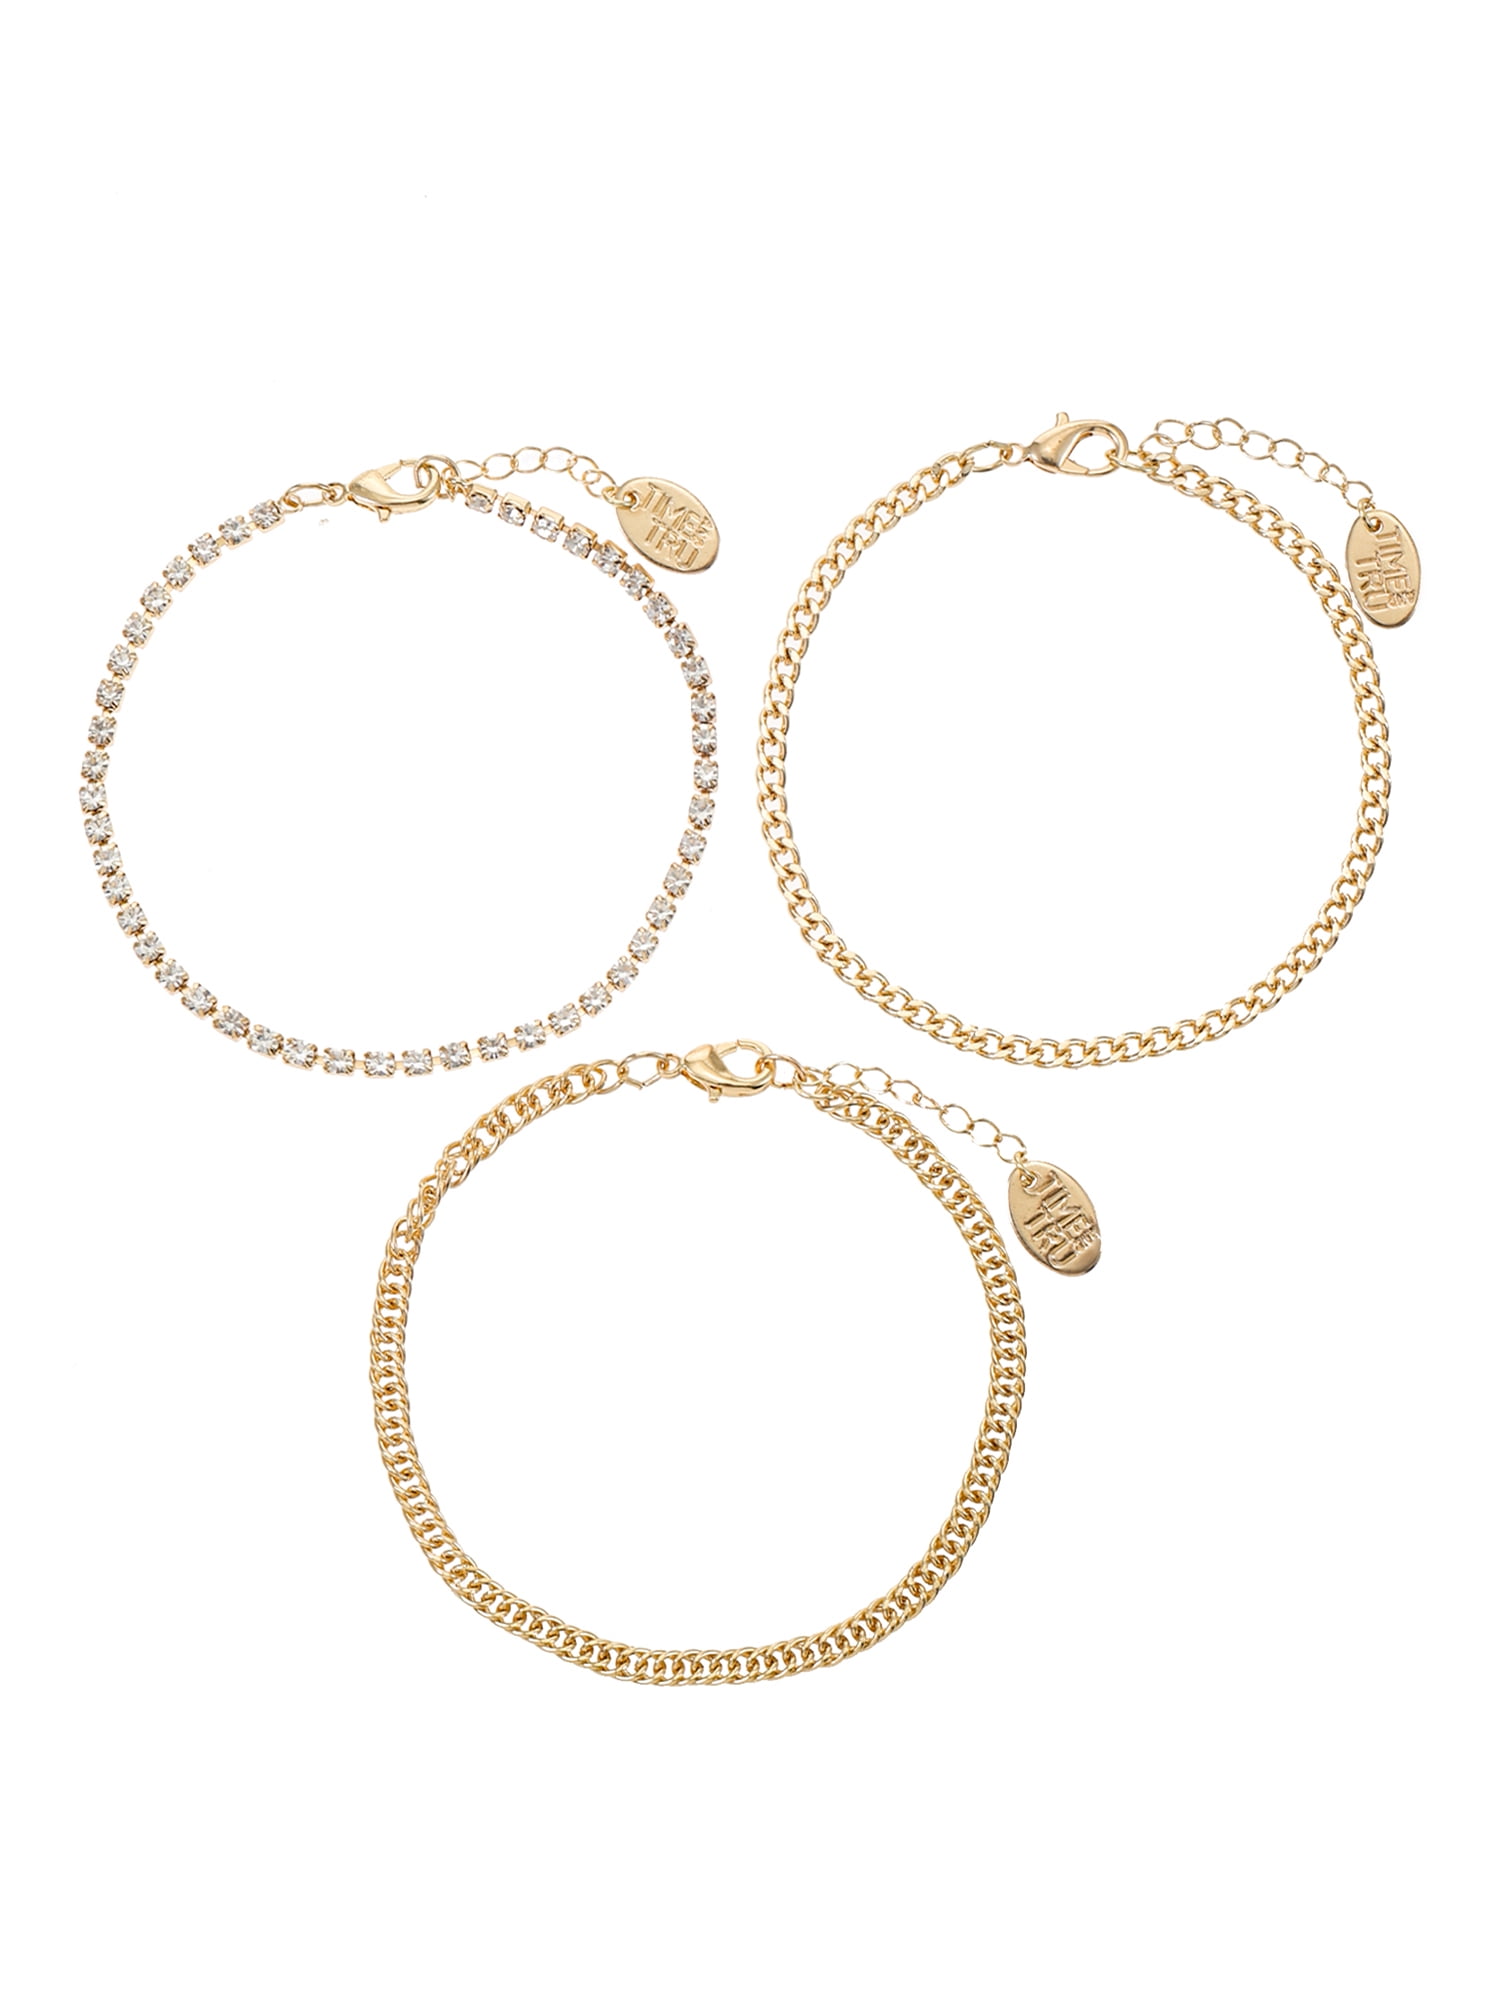 Women's 18K Gold Plated 3 Color Diamond Cut Bangle Bracelet set - 3 Pack Set  | eBay